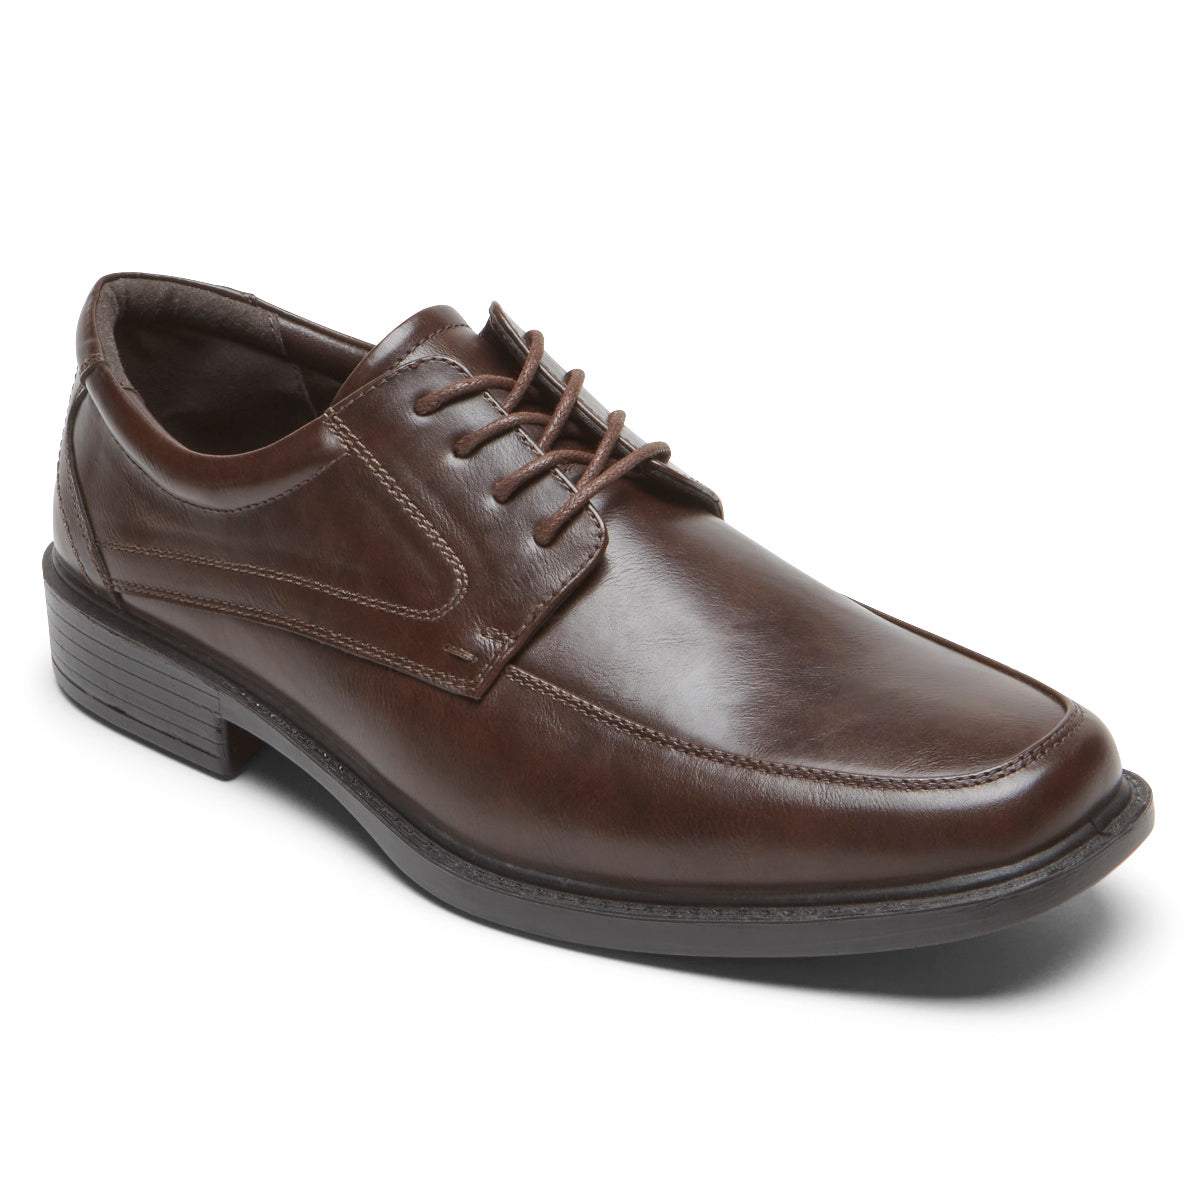 Rockport Men's Everett Oxford Dress Shoes (Black or Brown) $35 + 2.5% SD Cashback + Free Shipping